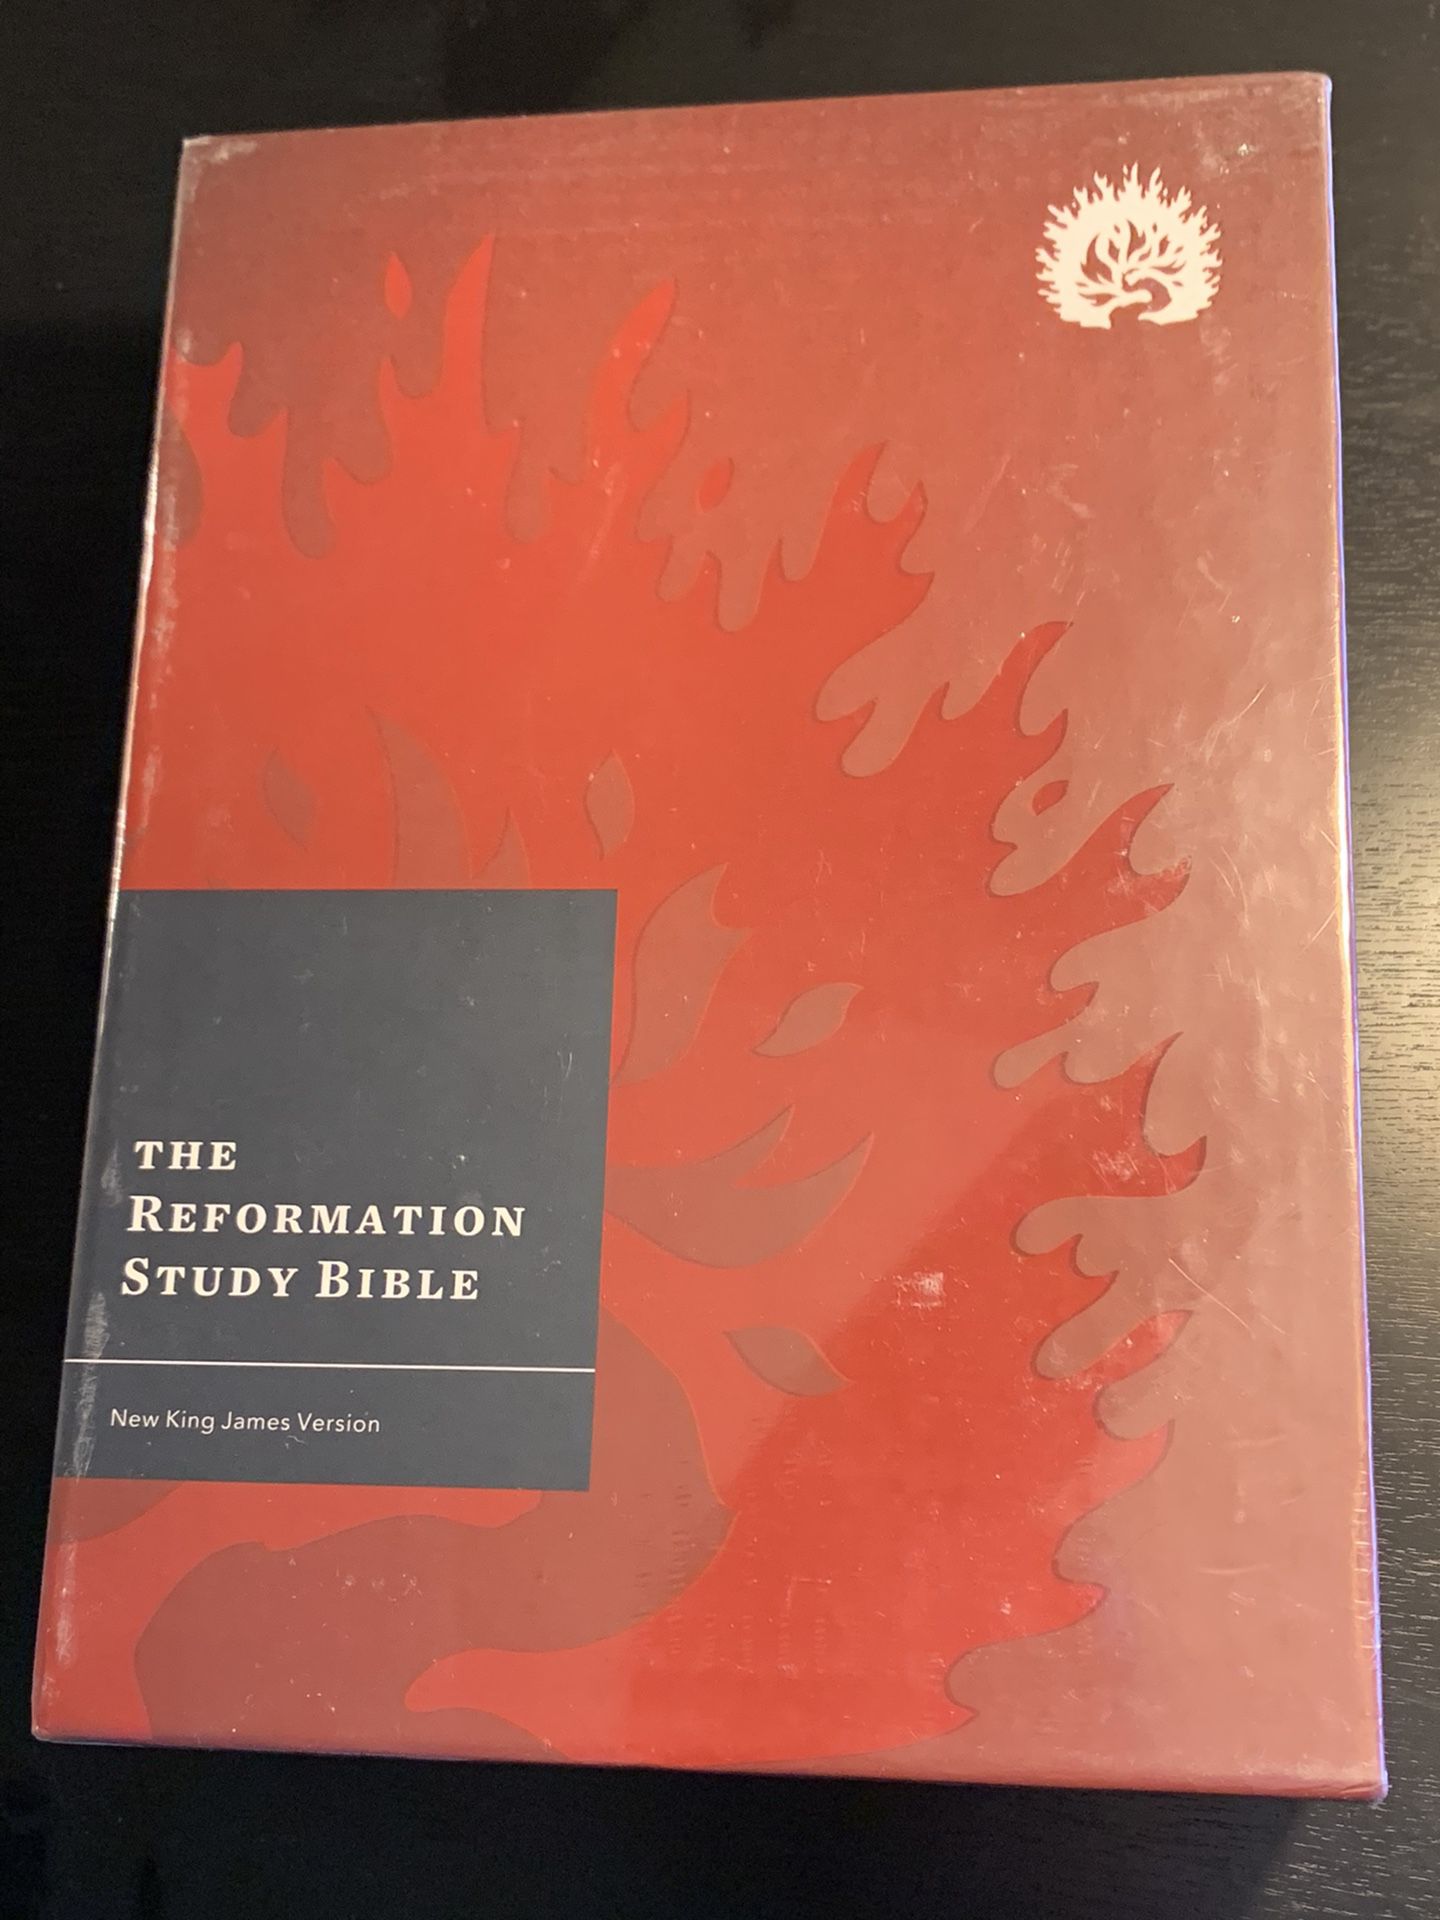 NKJV Reformation study Bible - Brand New